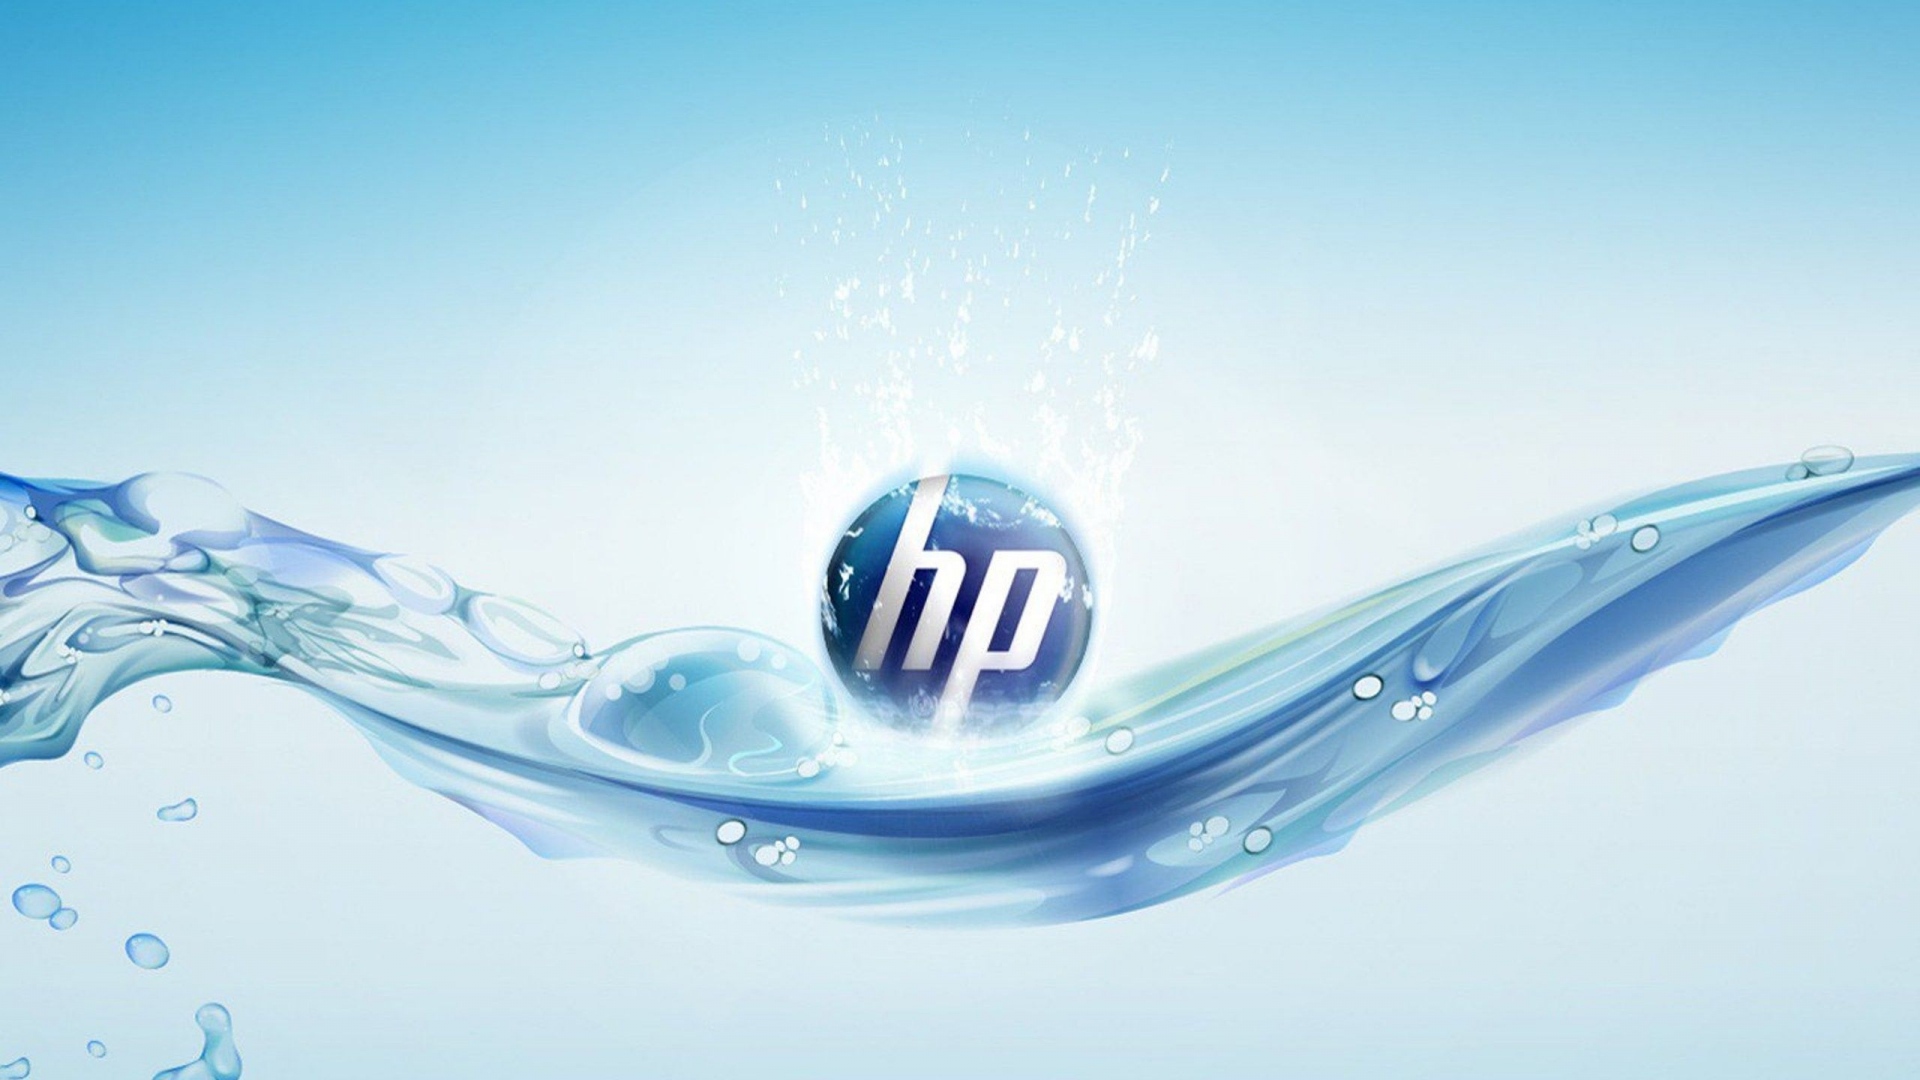  HP  Wallpapers  HD Download Free PixelsTalk Net